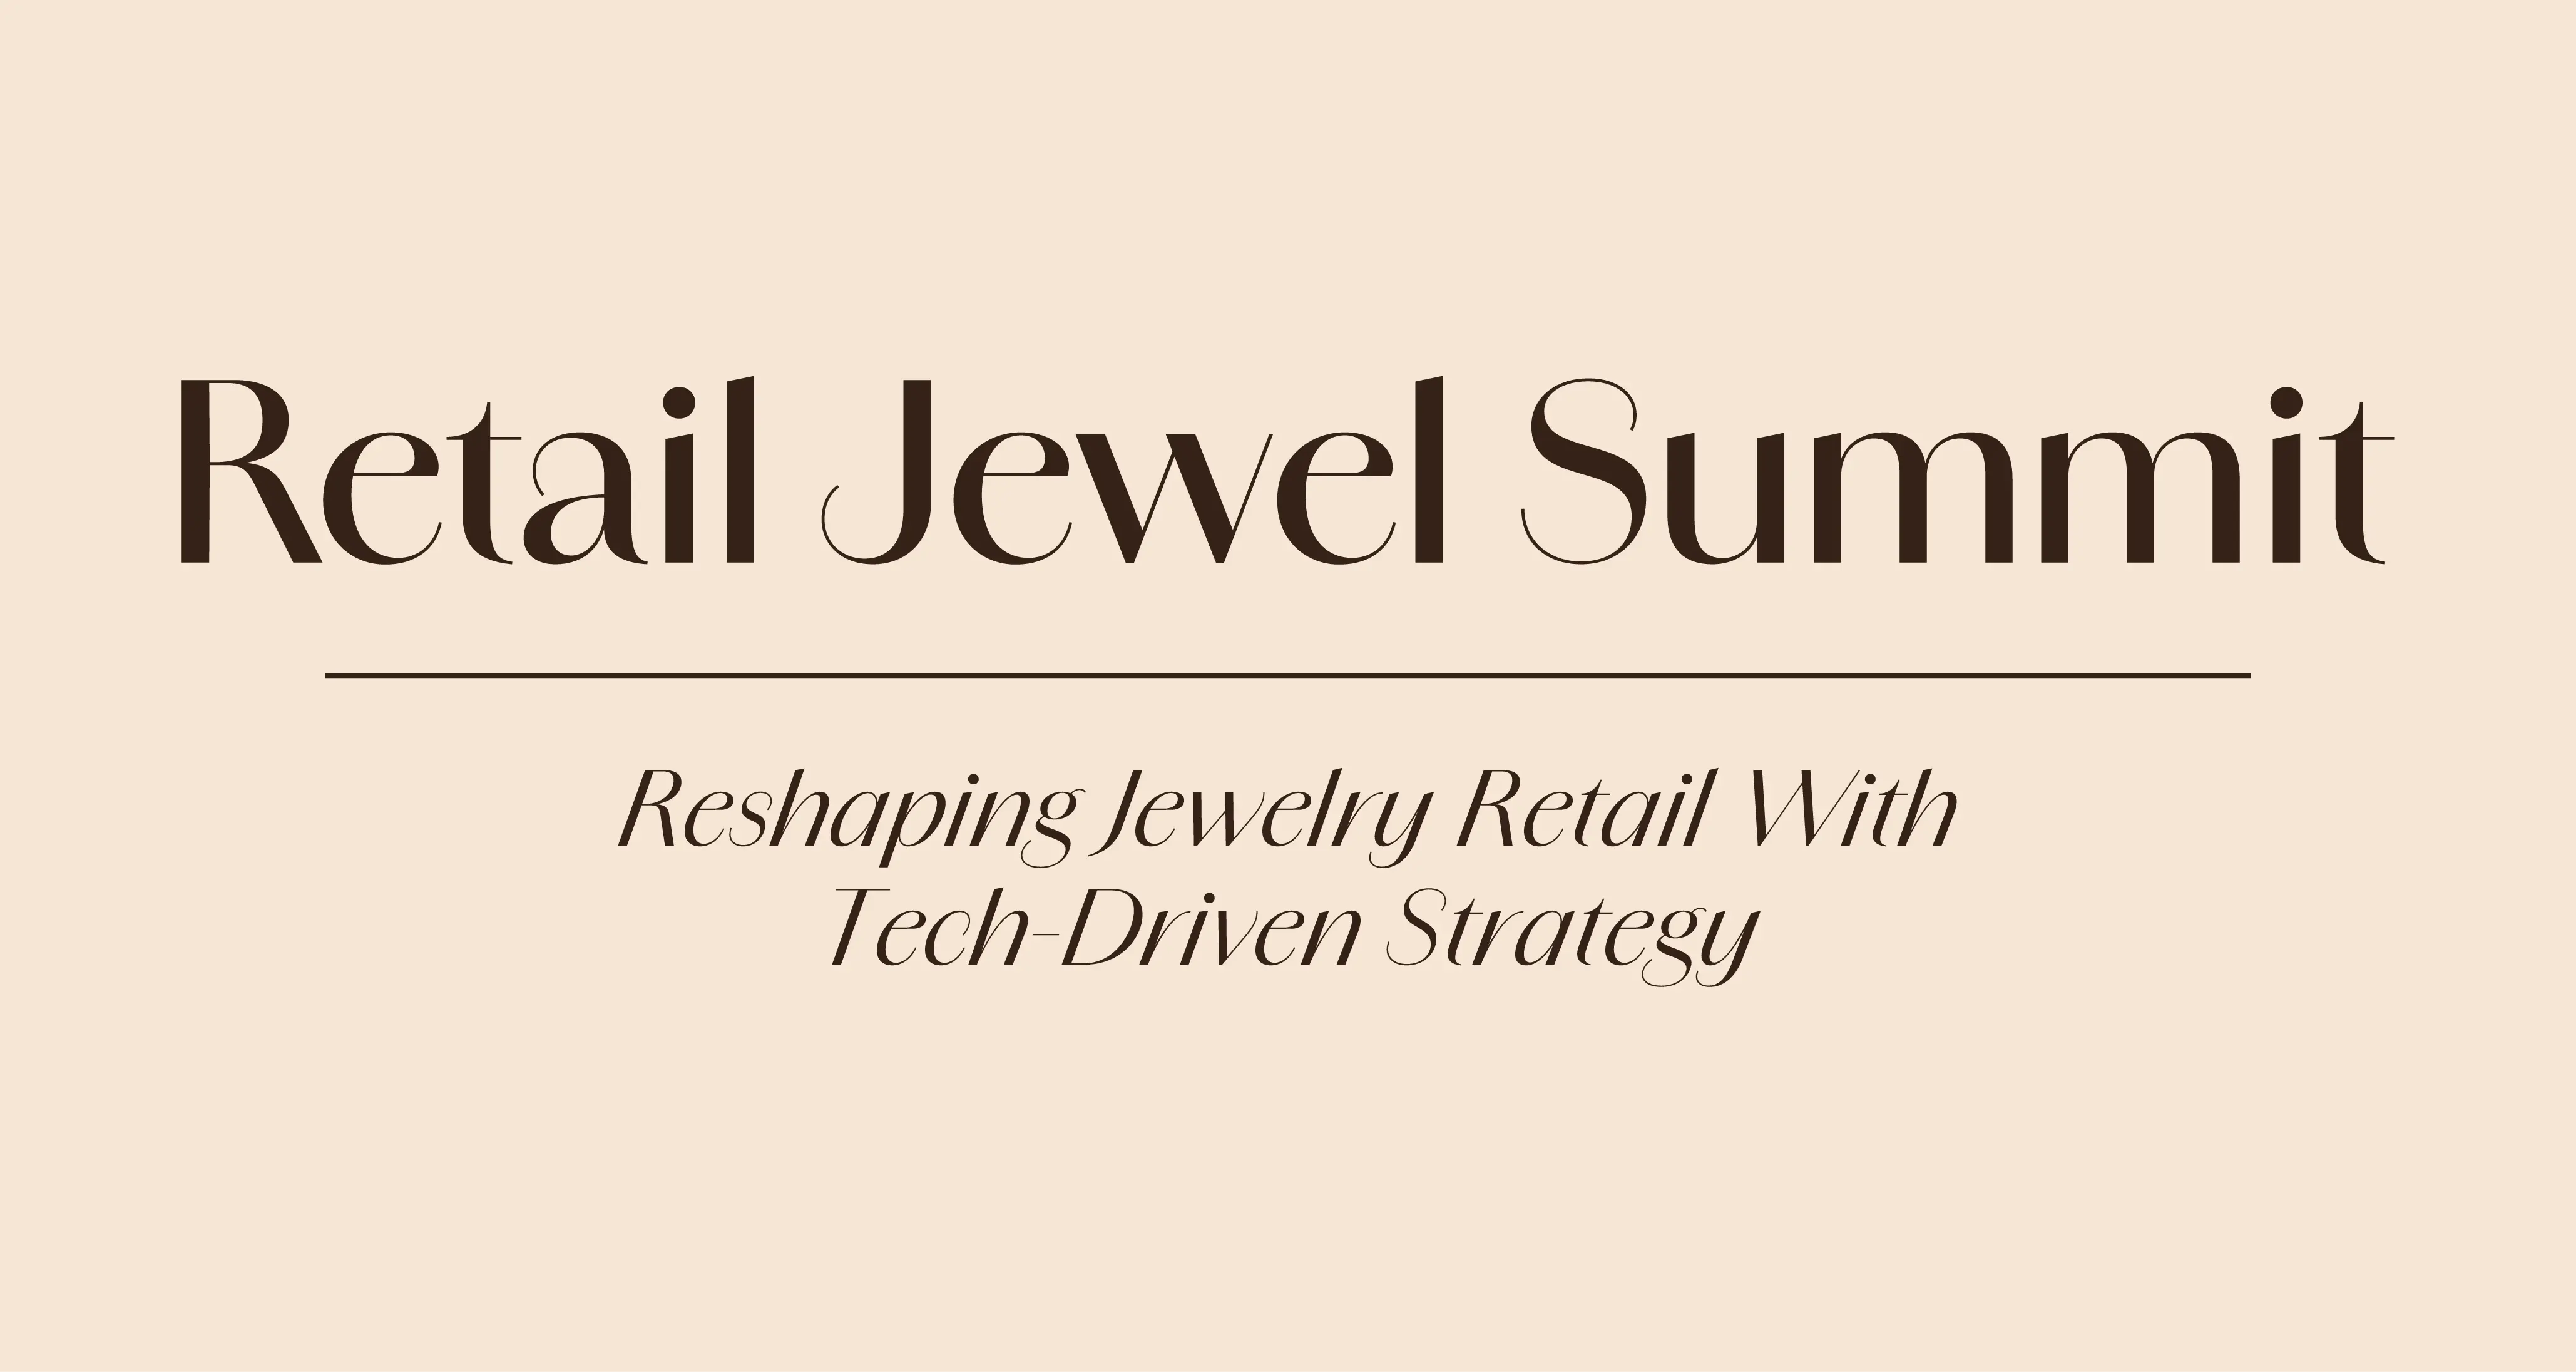 Retail Jewel Summit Event Highlights